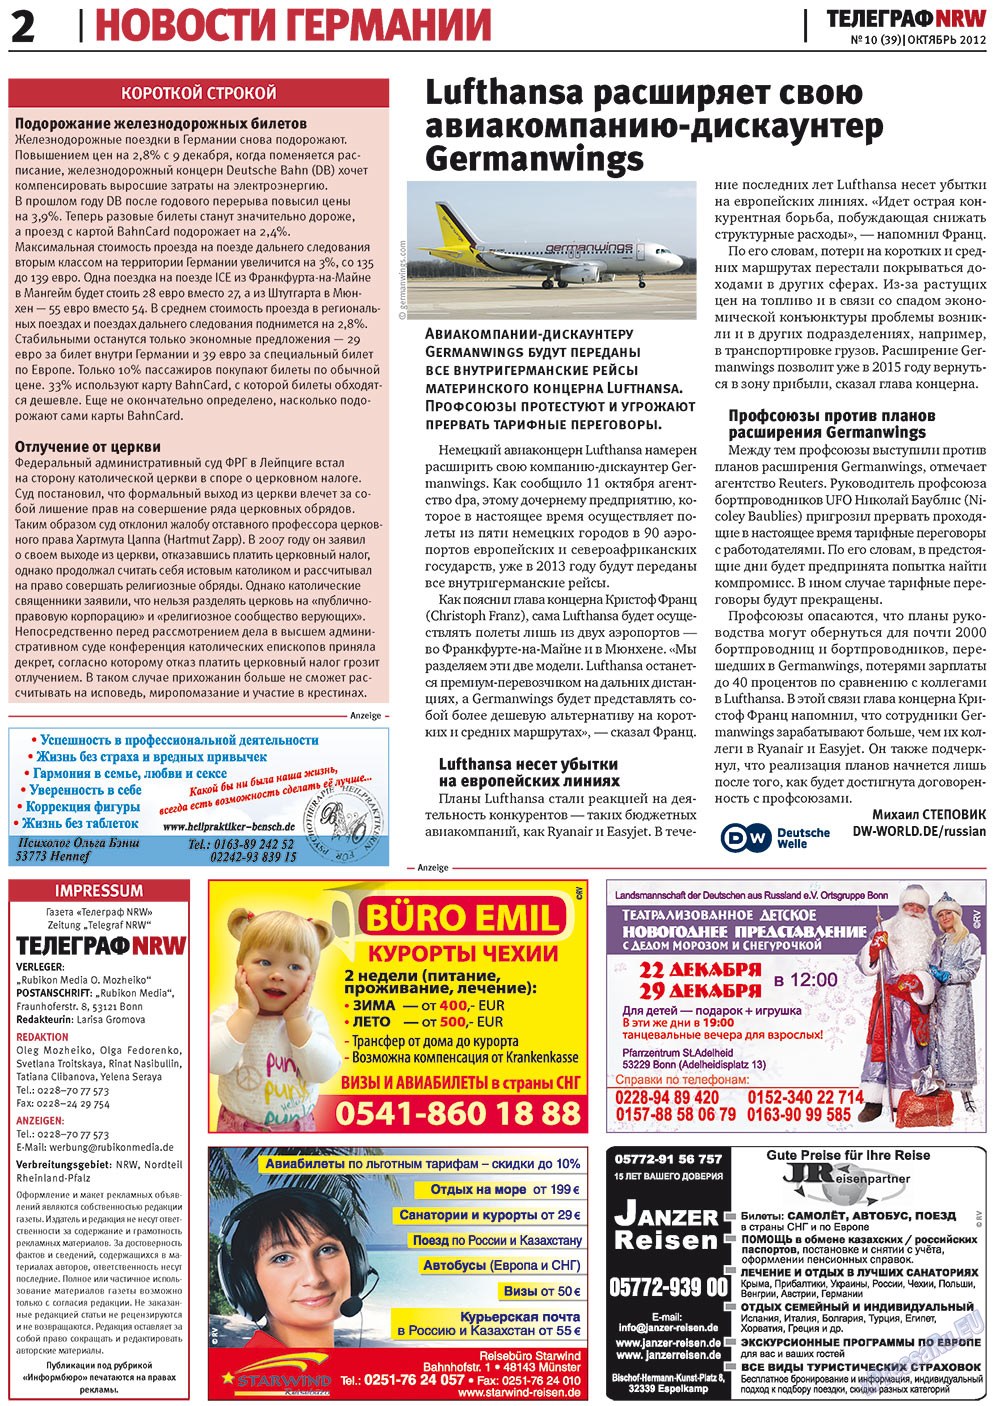 Телеграф NRW, газета. 2012 №10 стр.2